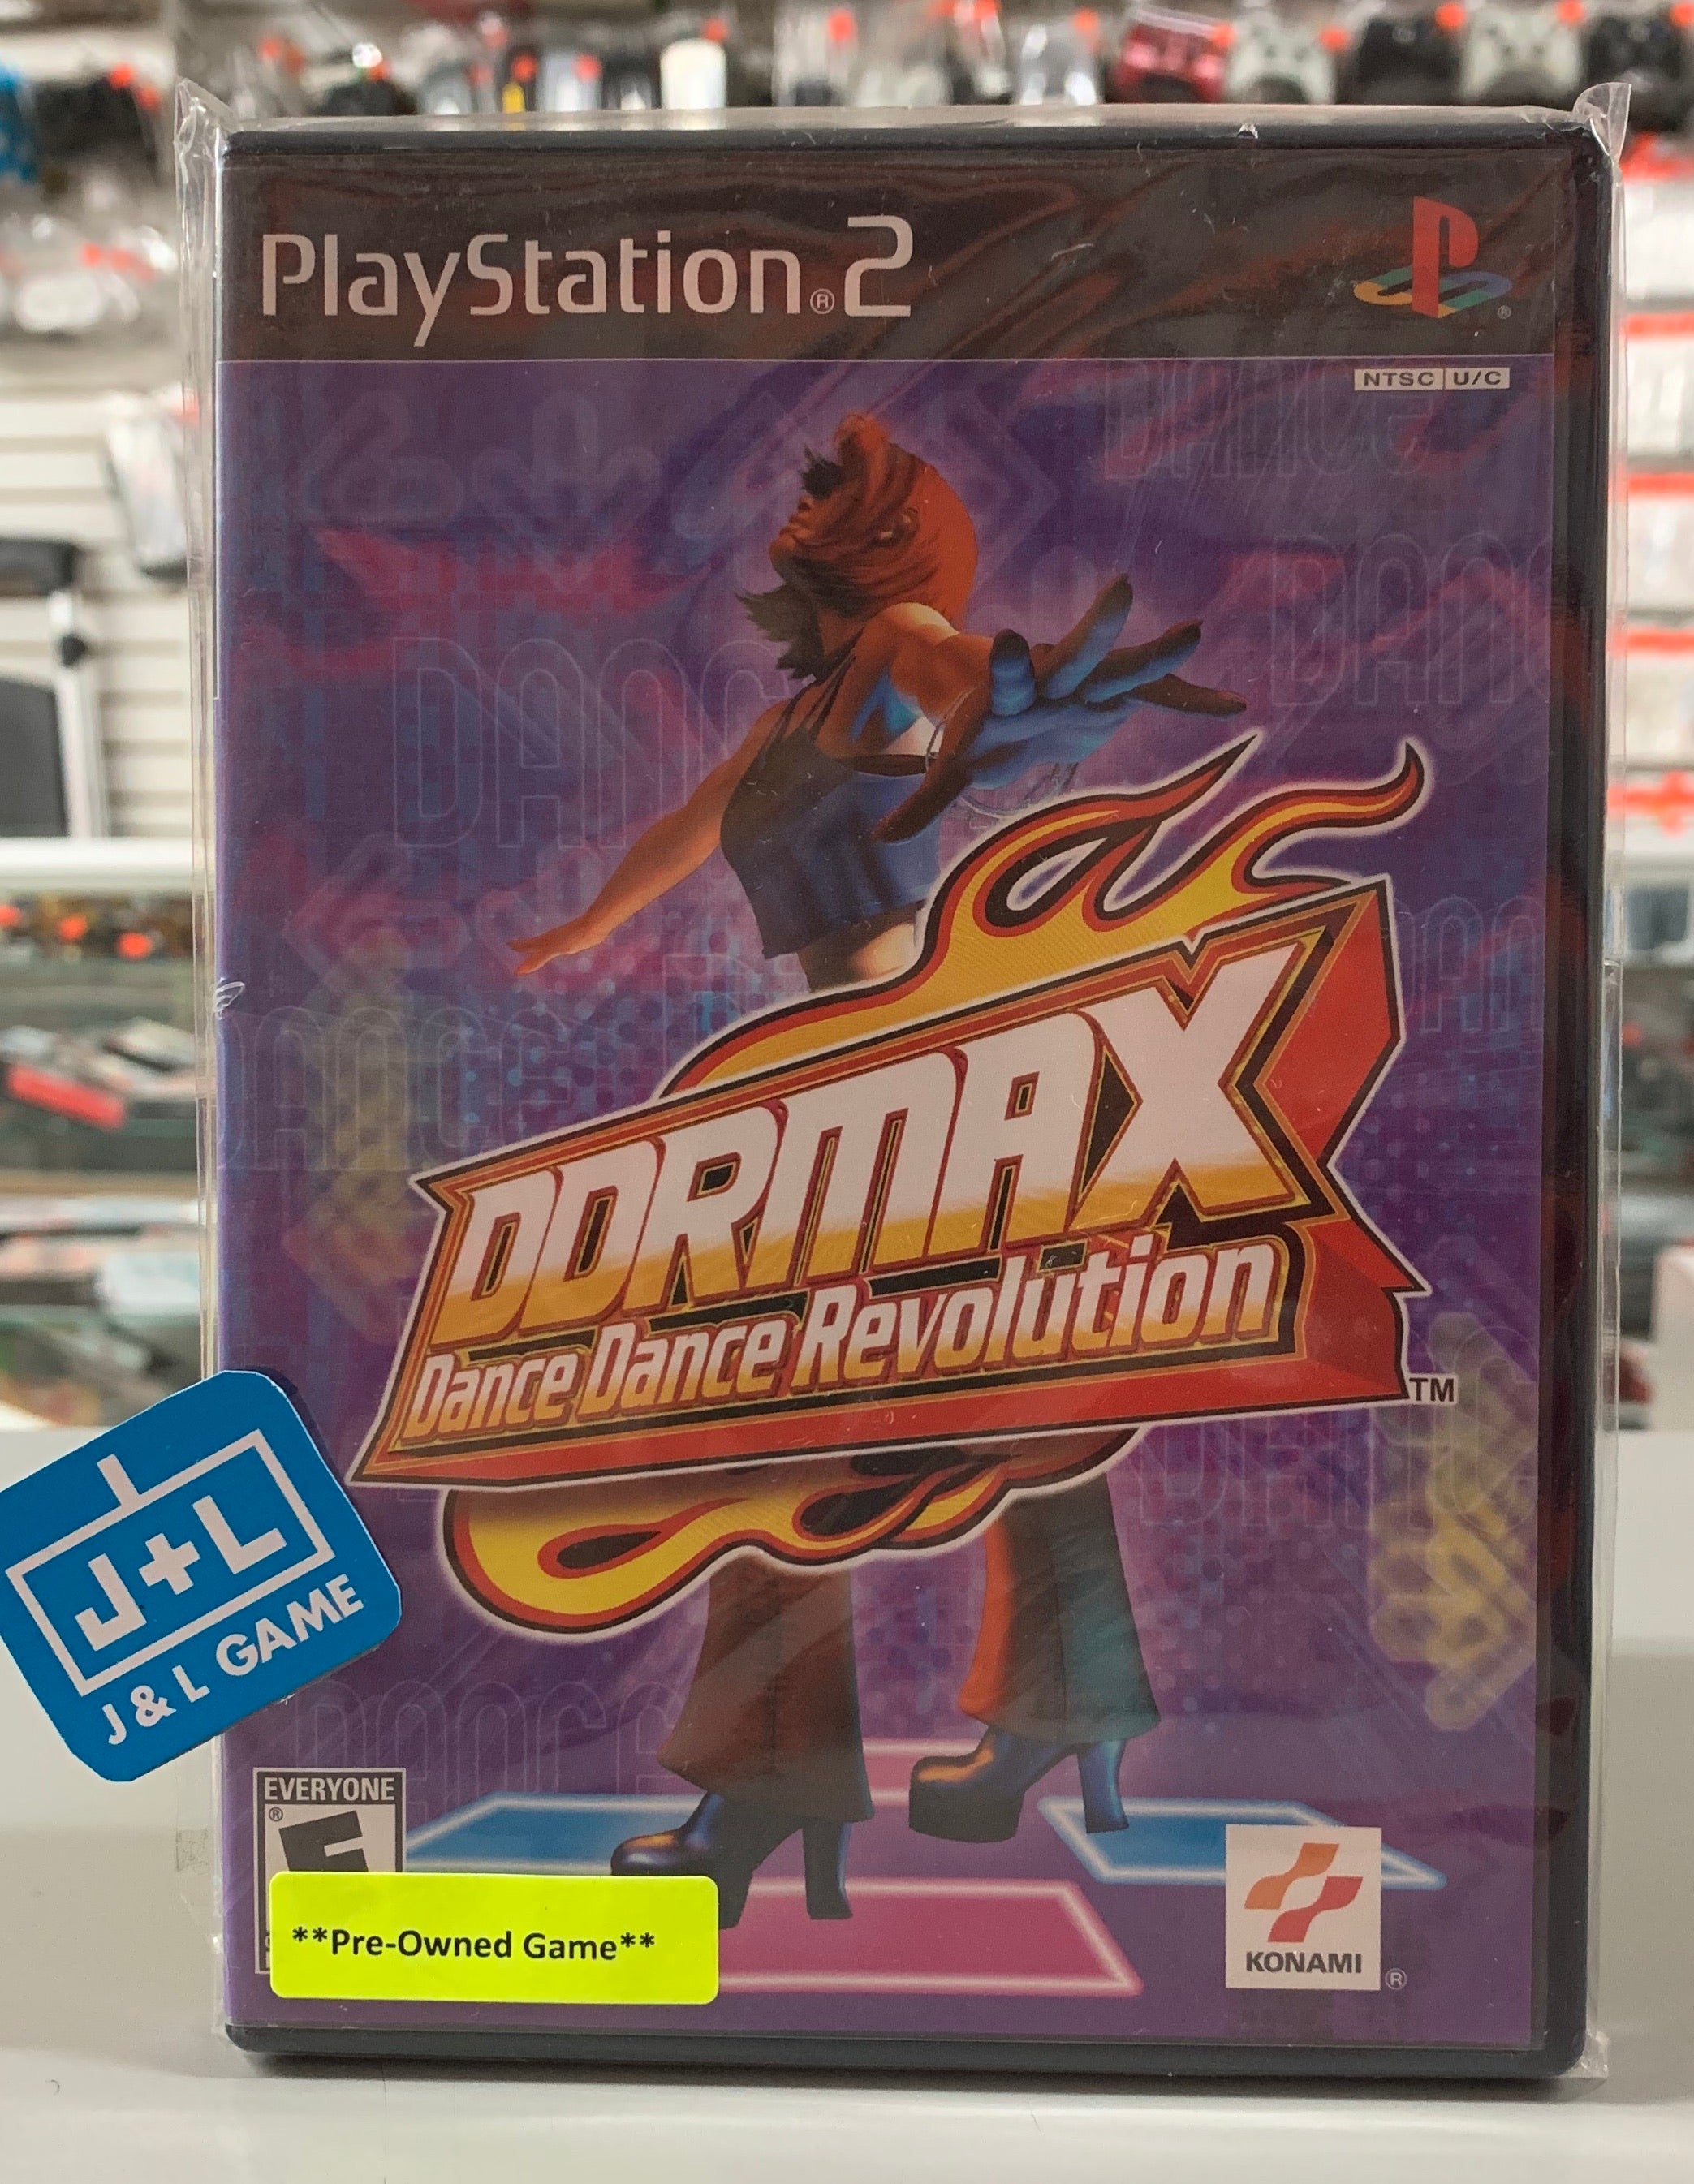 DDRMAX: Dance Dance Revolution - PlayStation 2 [Pre-Owned] Video Games Konami   